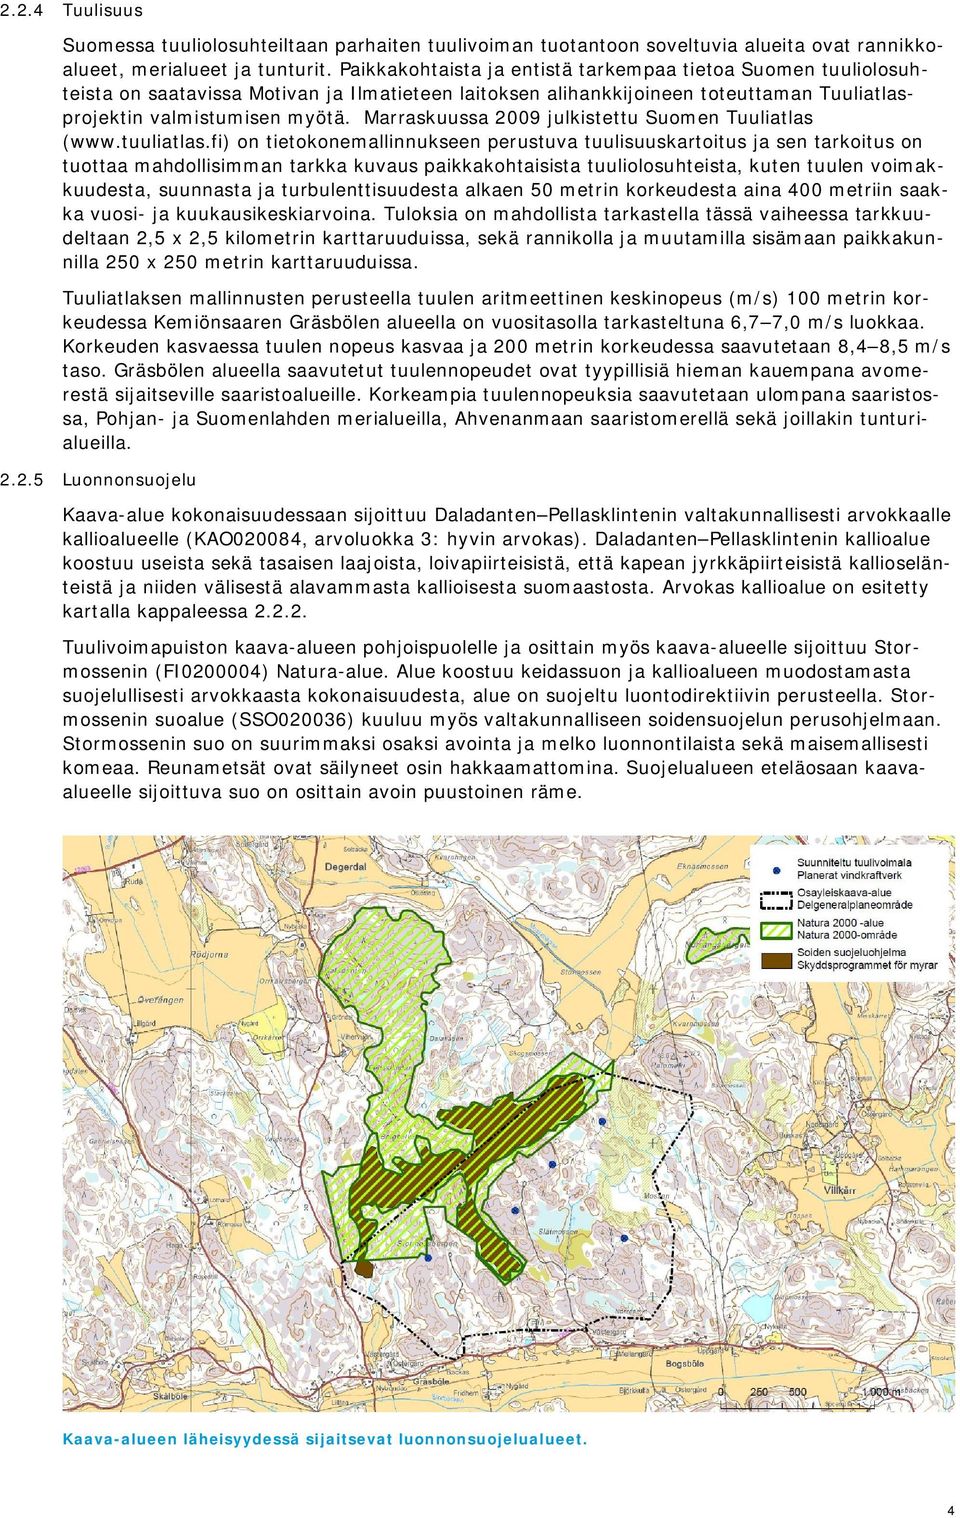 Marraskuussa 2009 julkistettu Suomen Tuuliatlas (www.tuuliatlas.